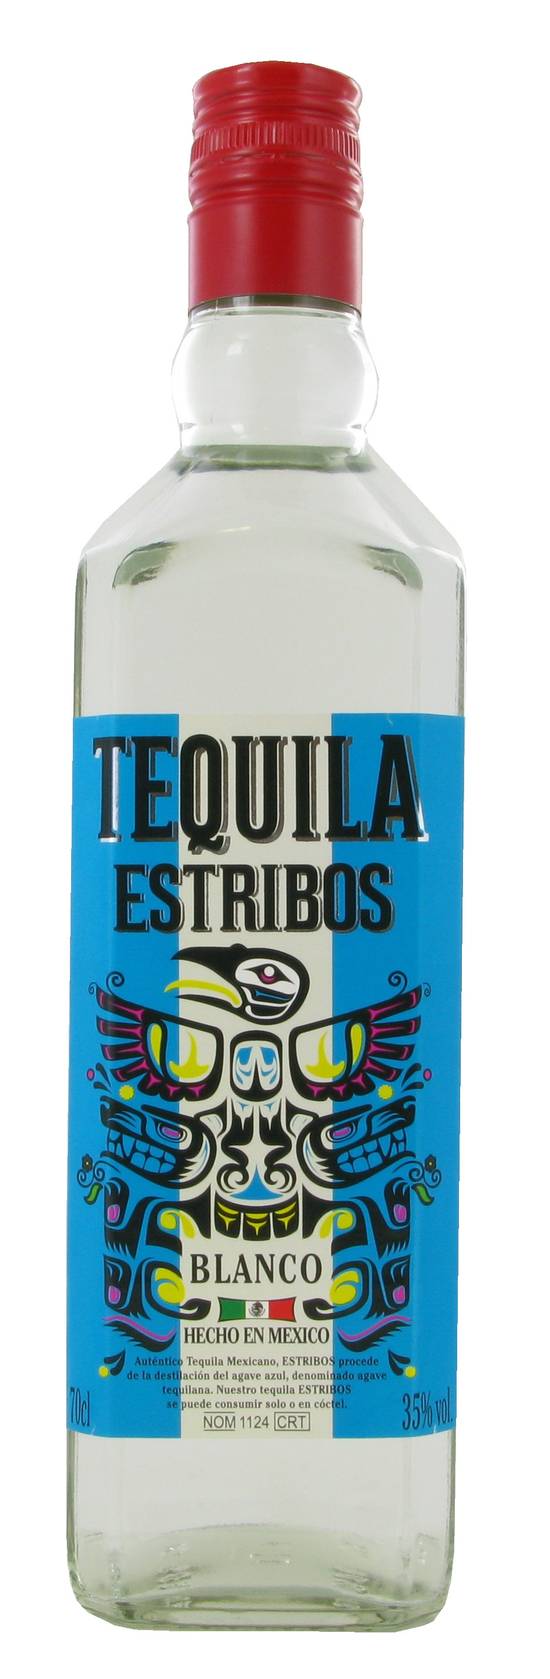 Estribos - Tequila blanco (70 ml)